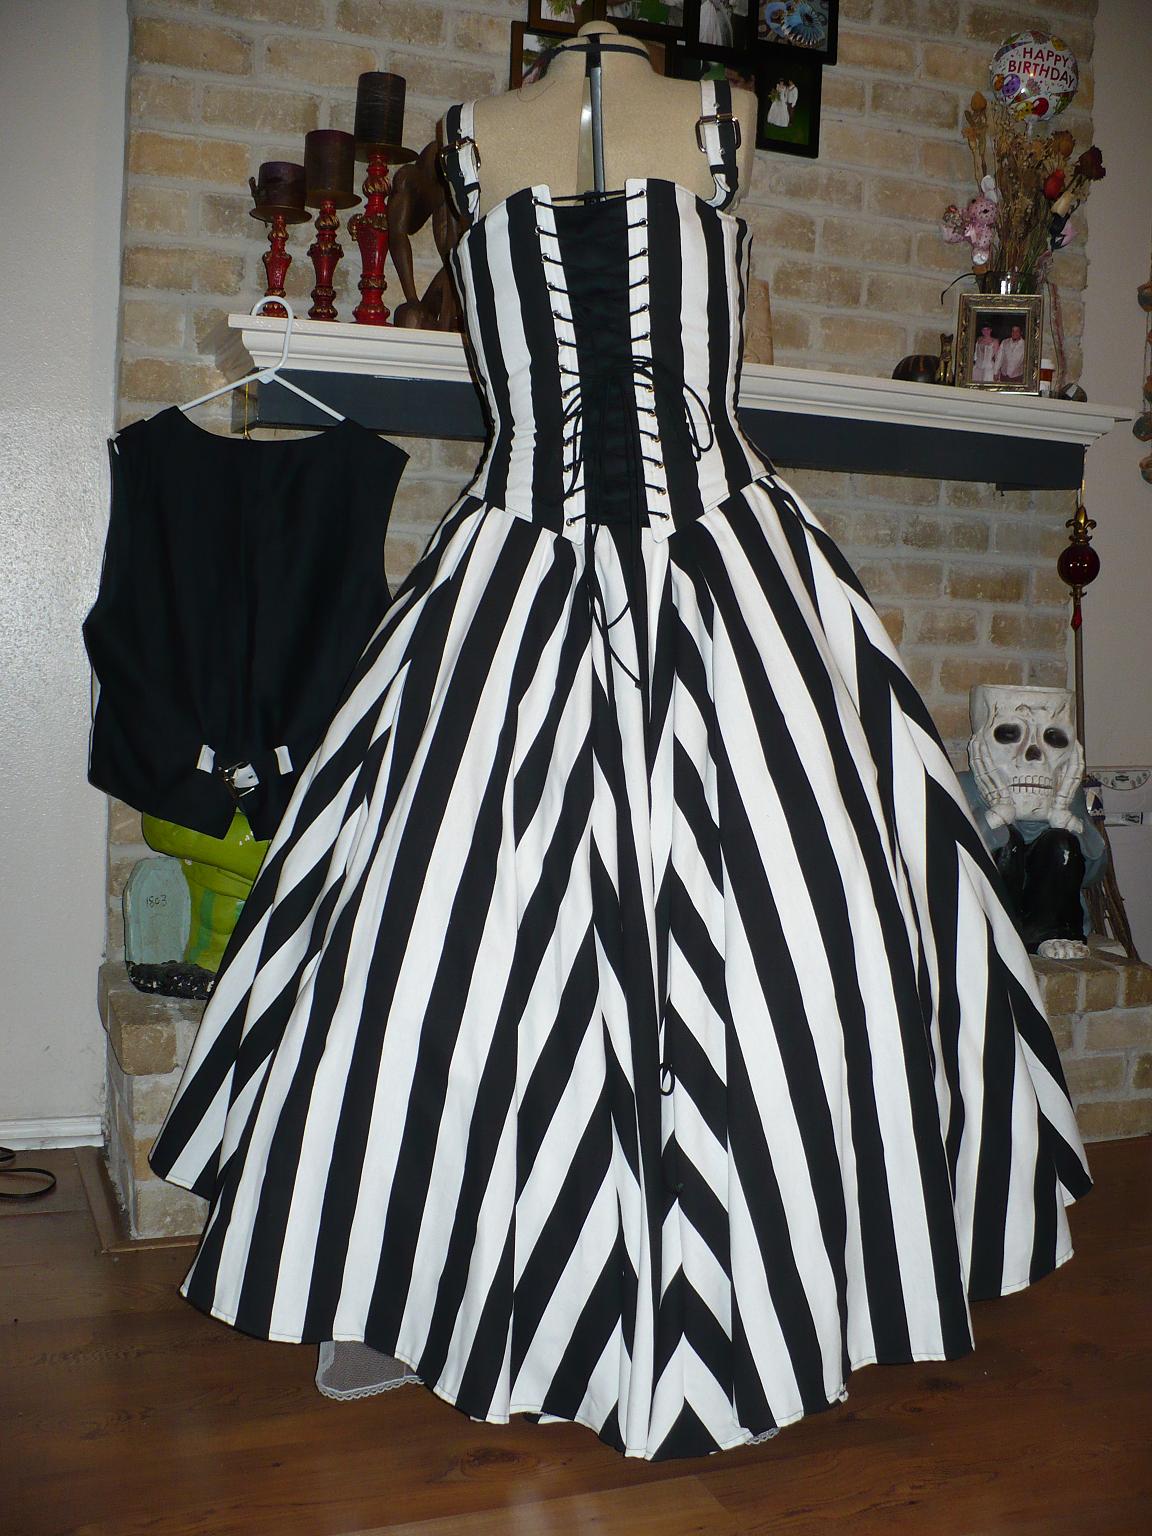 Zebra print wedding dress